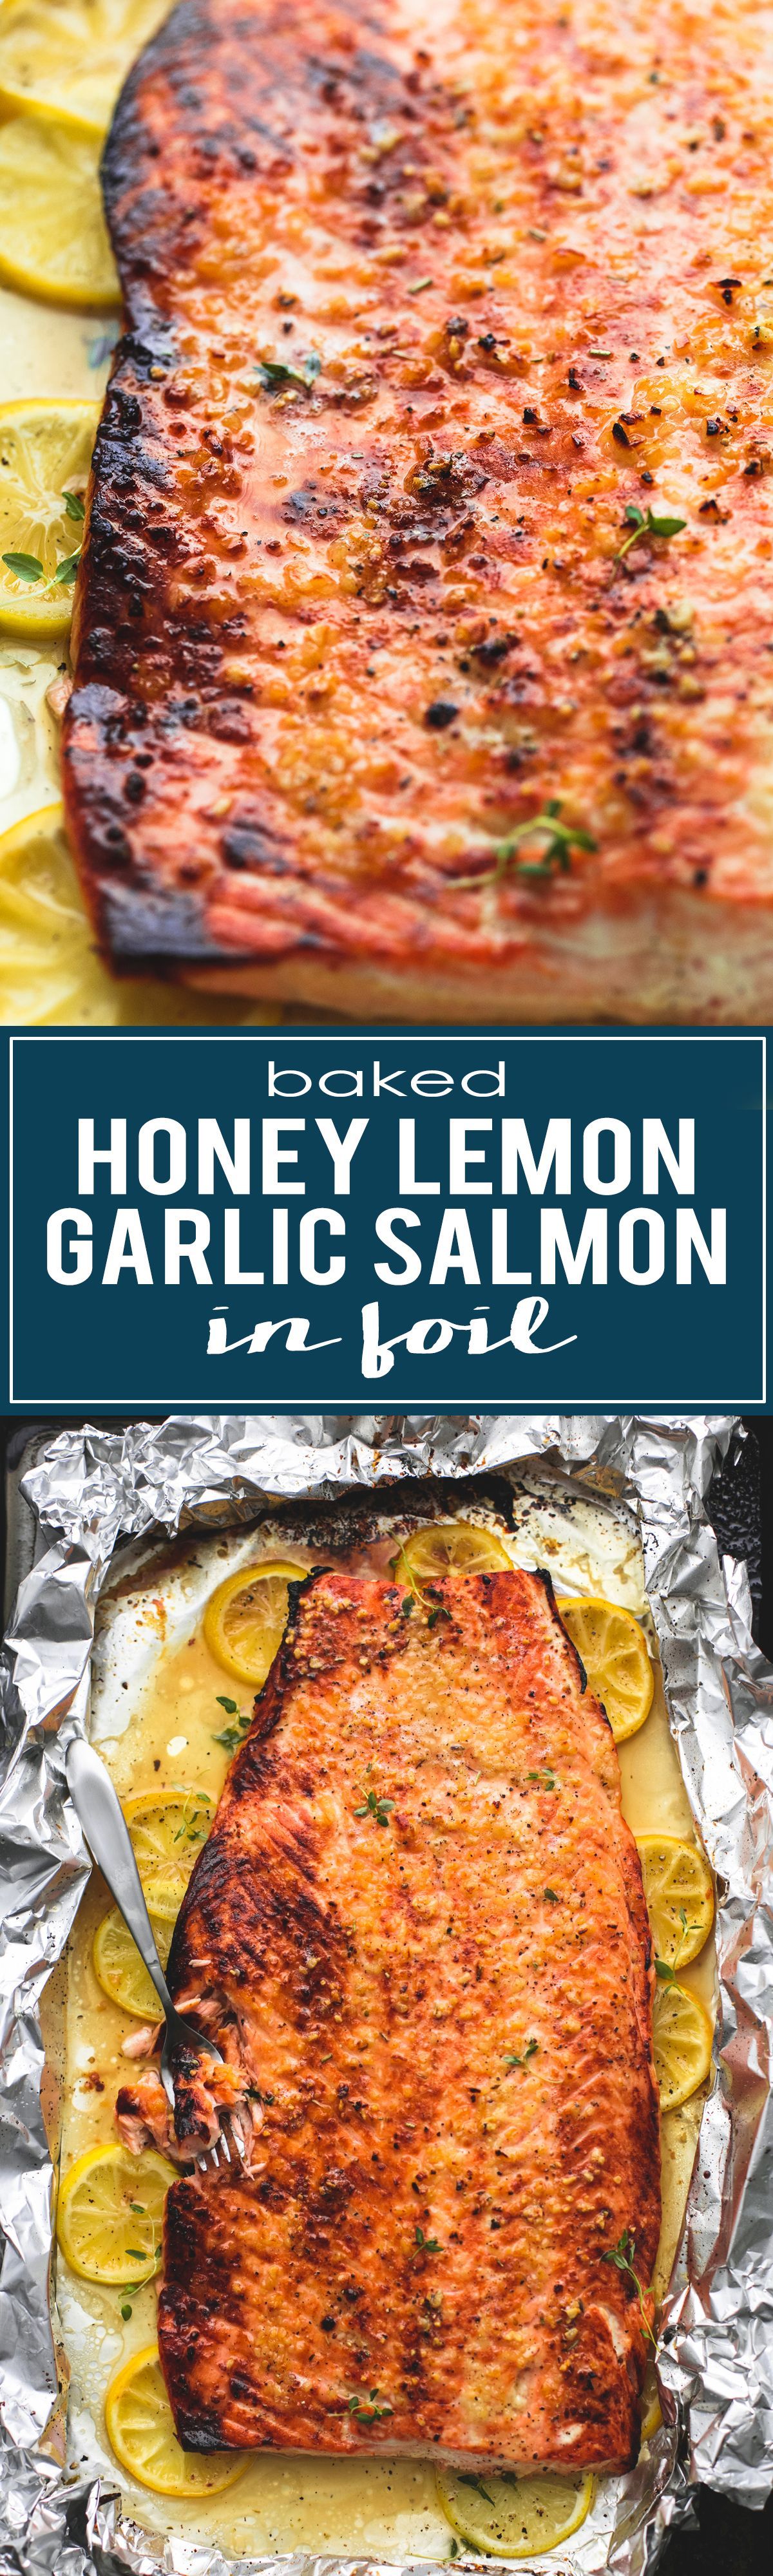 Easy and healthy Baked Honey Lemon Garlic Salmon in Foil | lecremedelacrumb.com